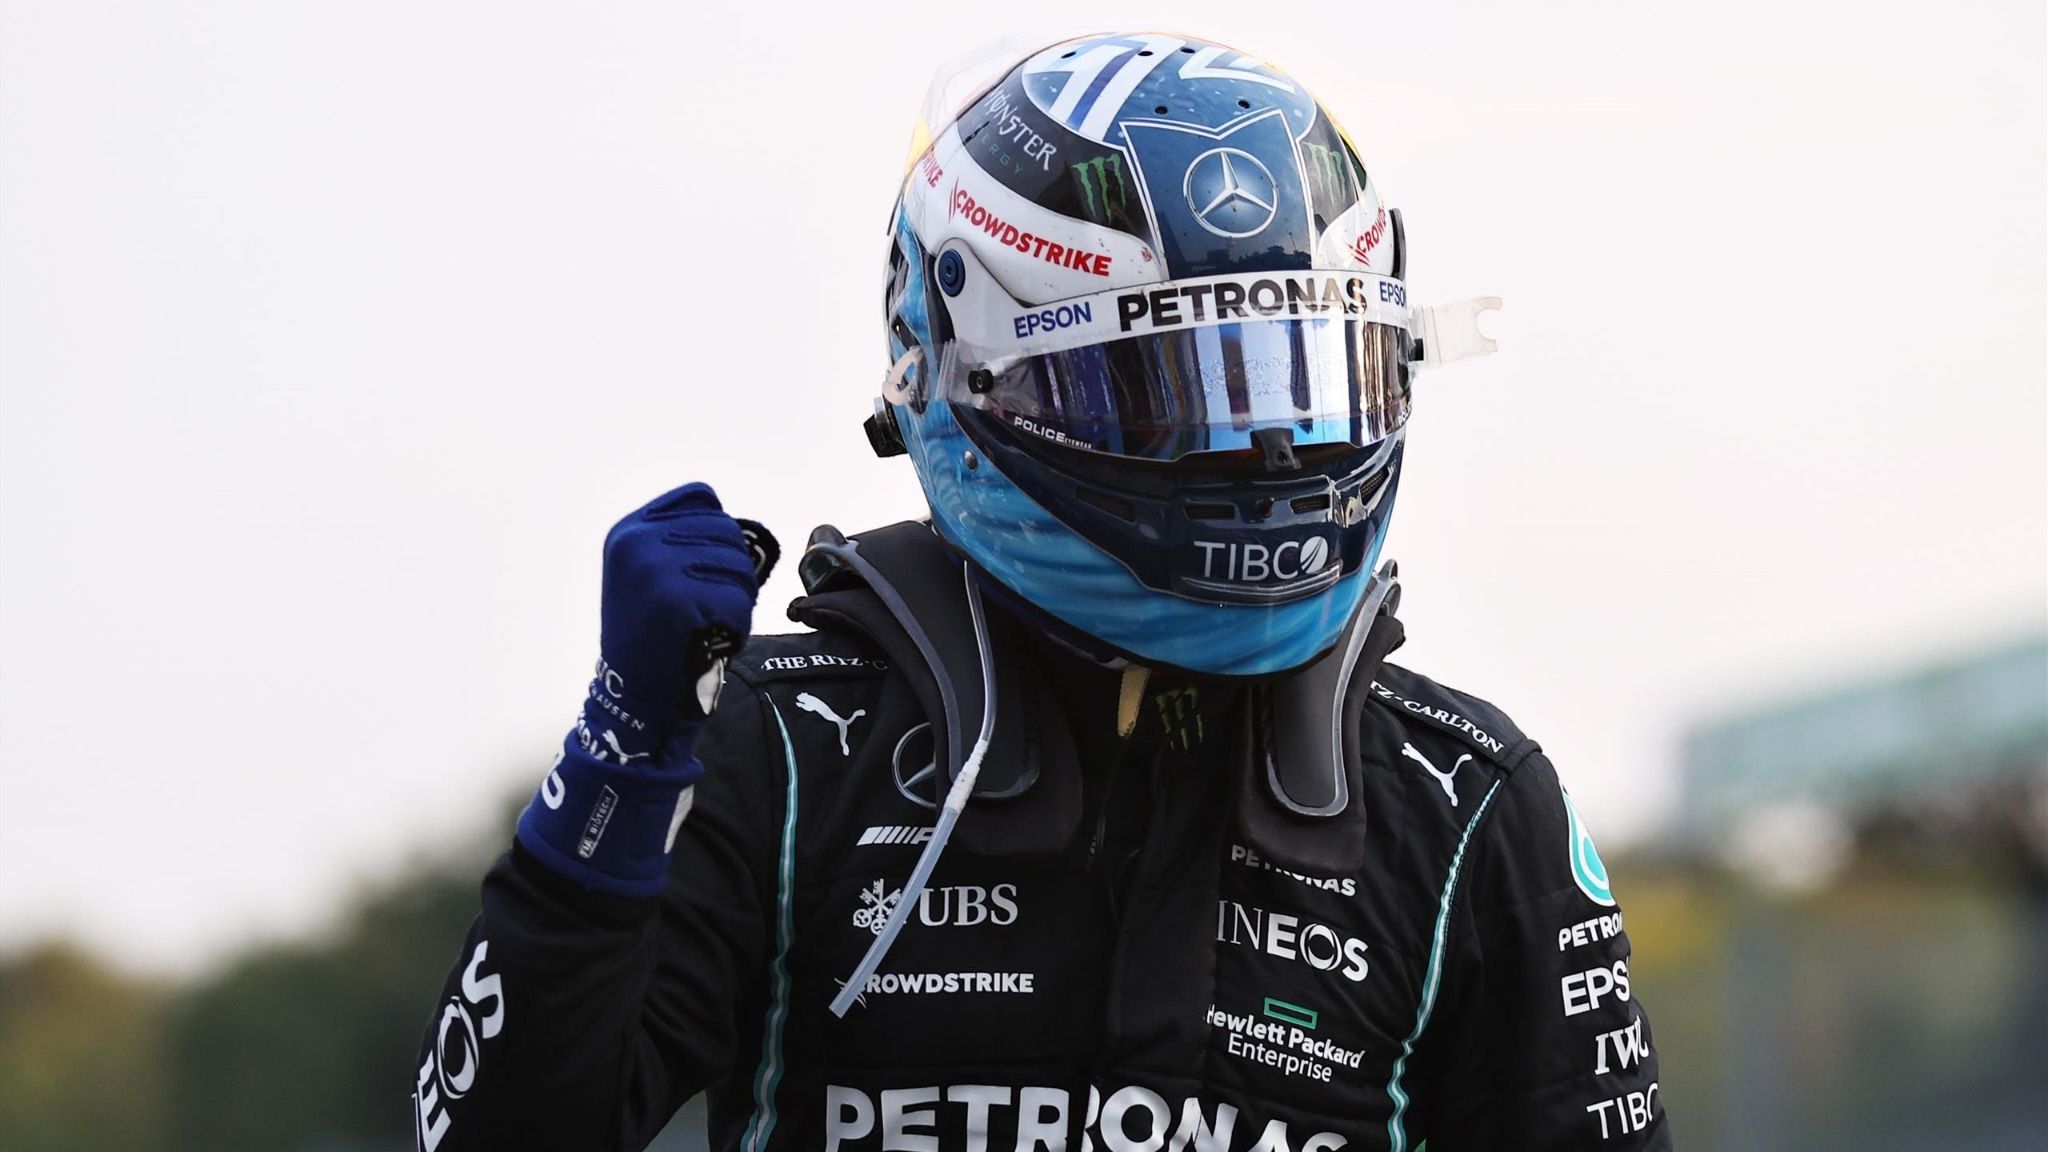 Lewis Hamilton tops the Turkish qualifying race, Bottas claims pole